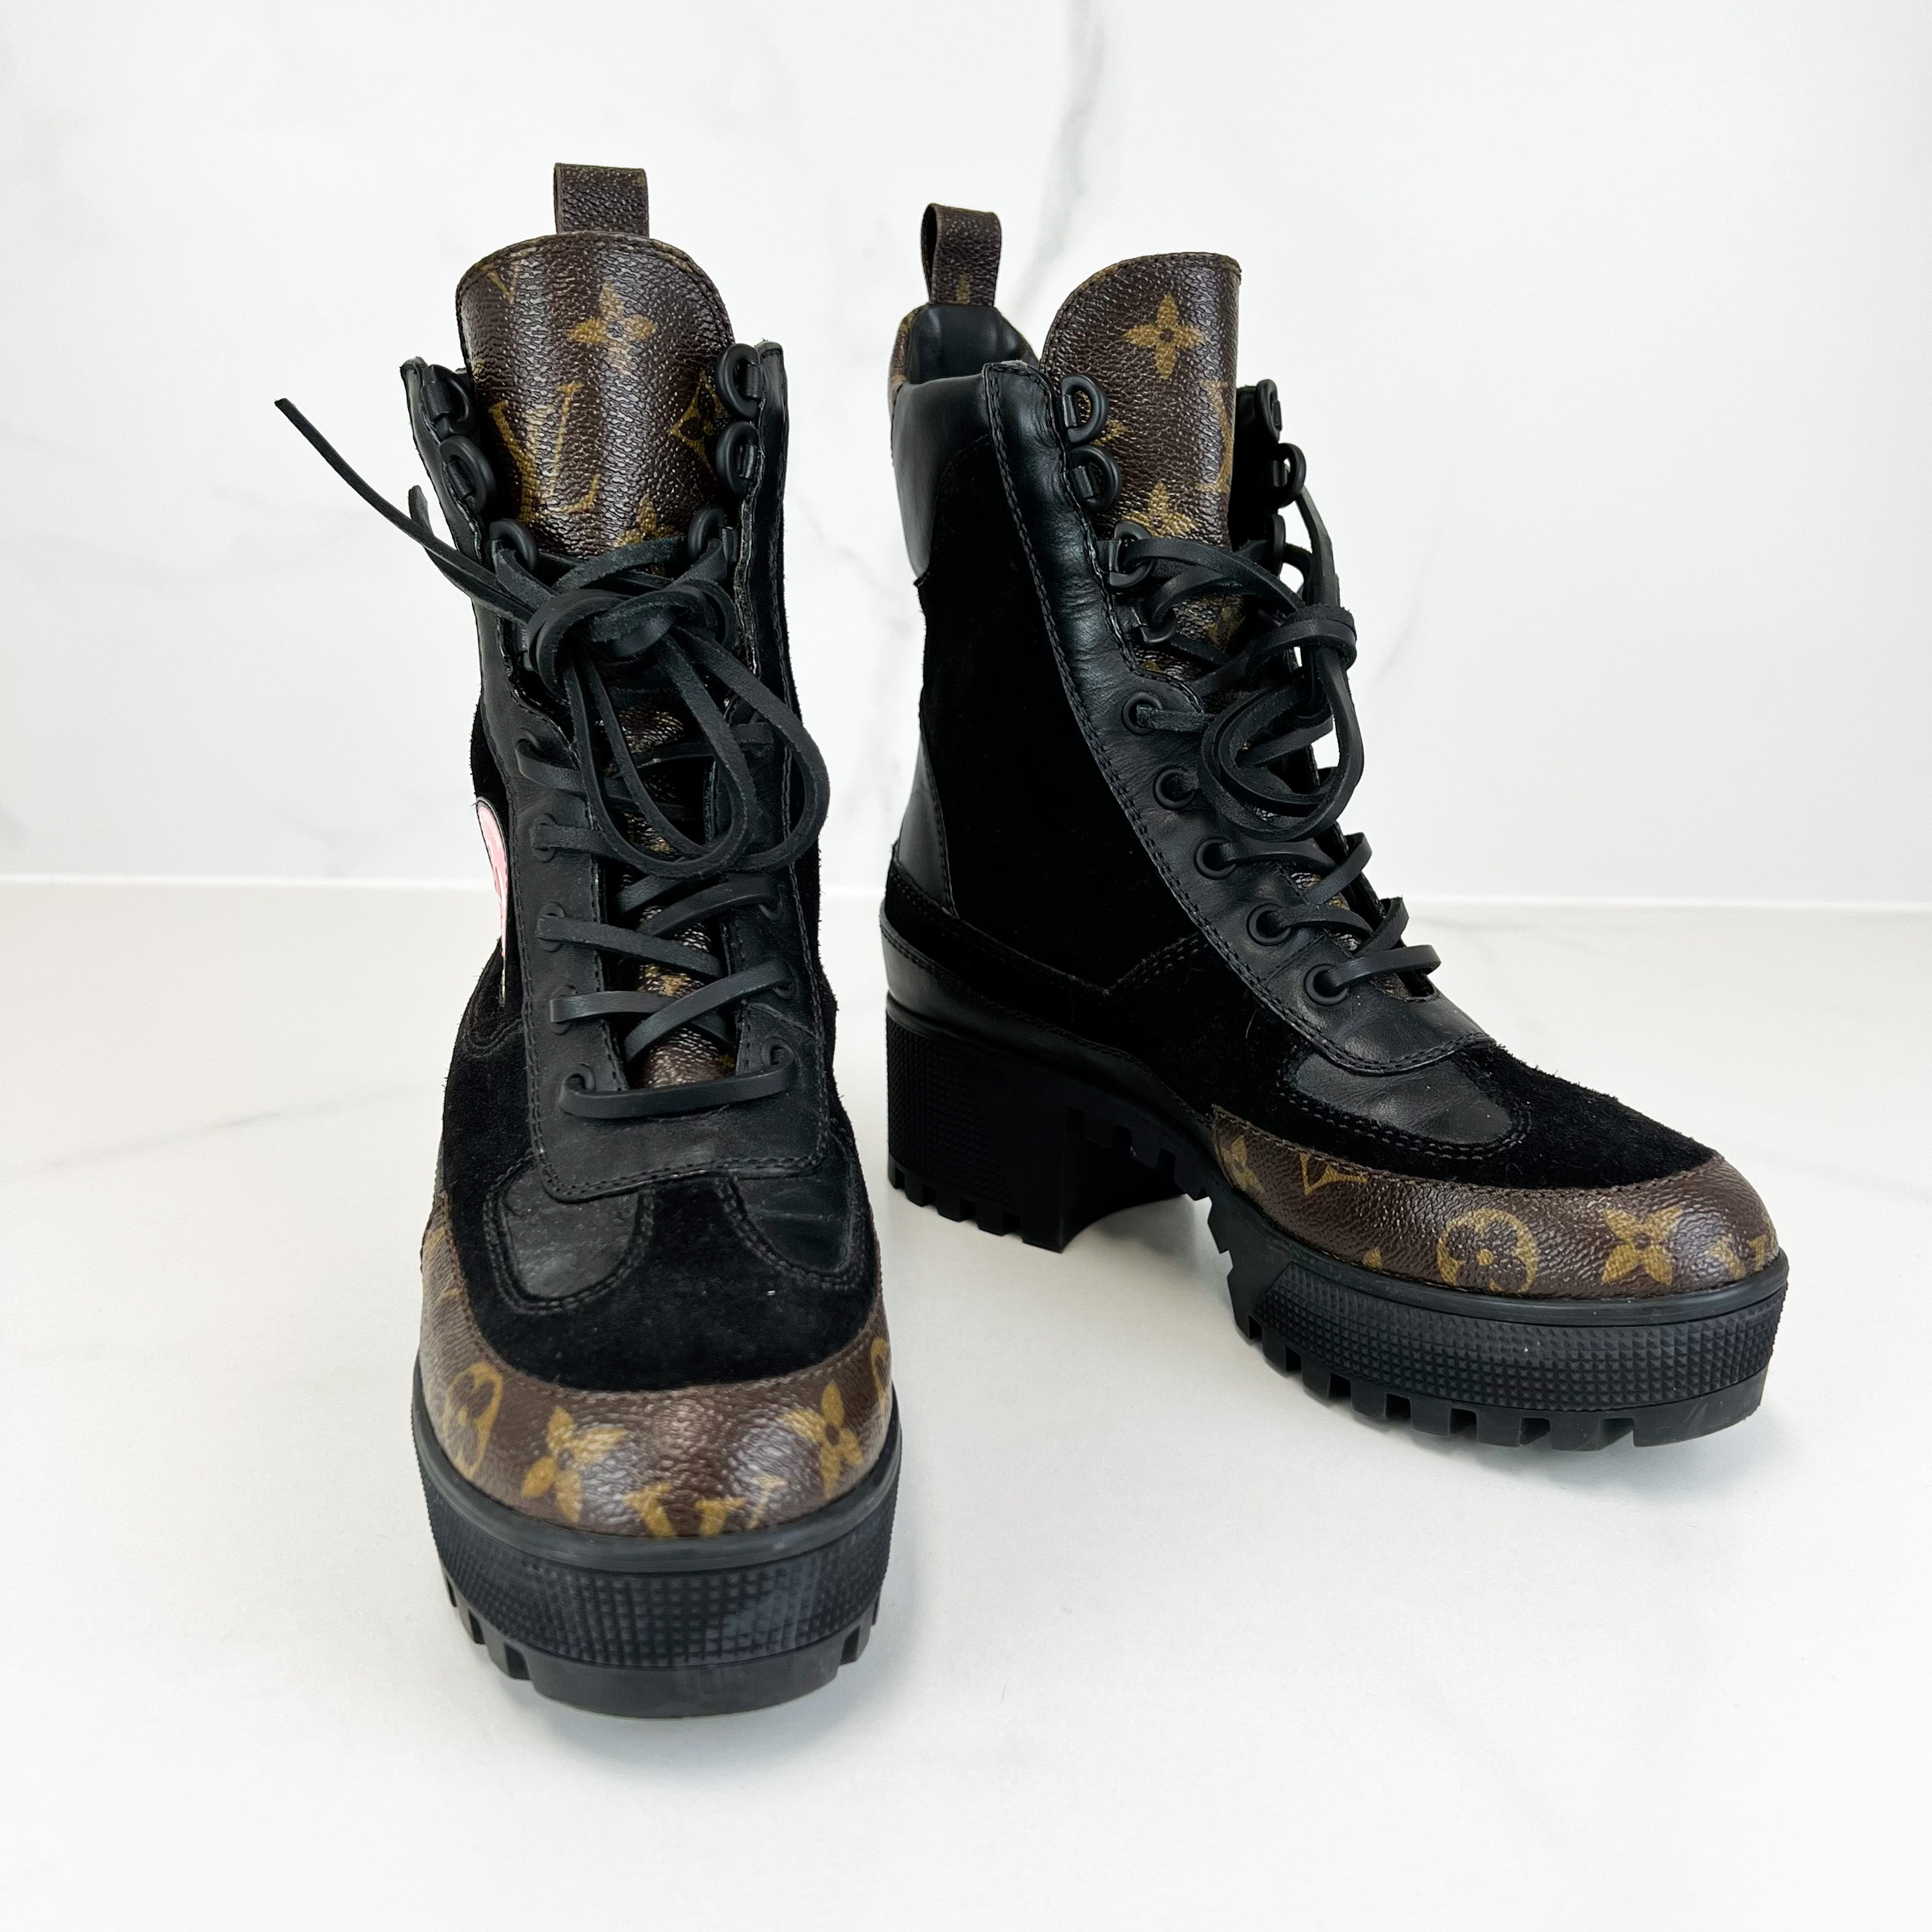 Louis Vuitton Monogram Silhouette Ankle Boot, Black, 36.5